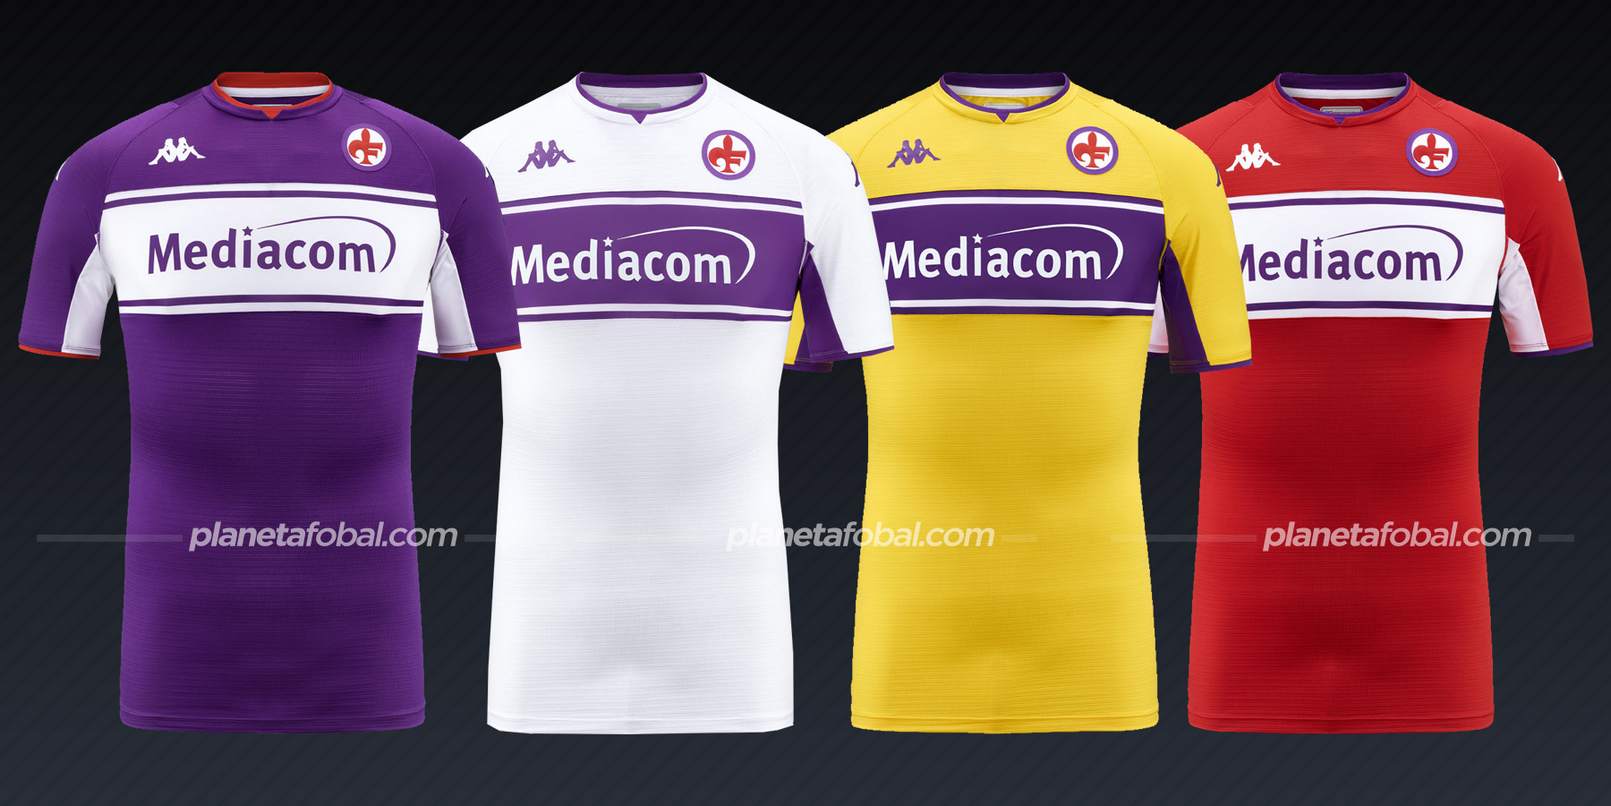 Fiorentina (Kappa) | Camisetas de la Serie A 2021/22